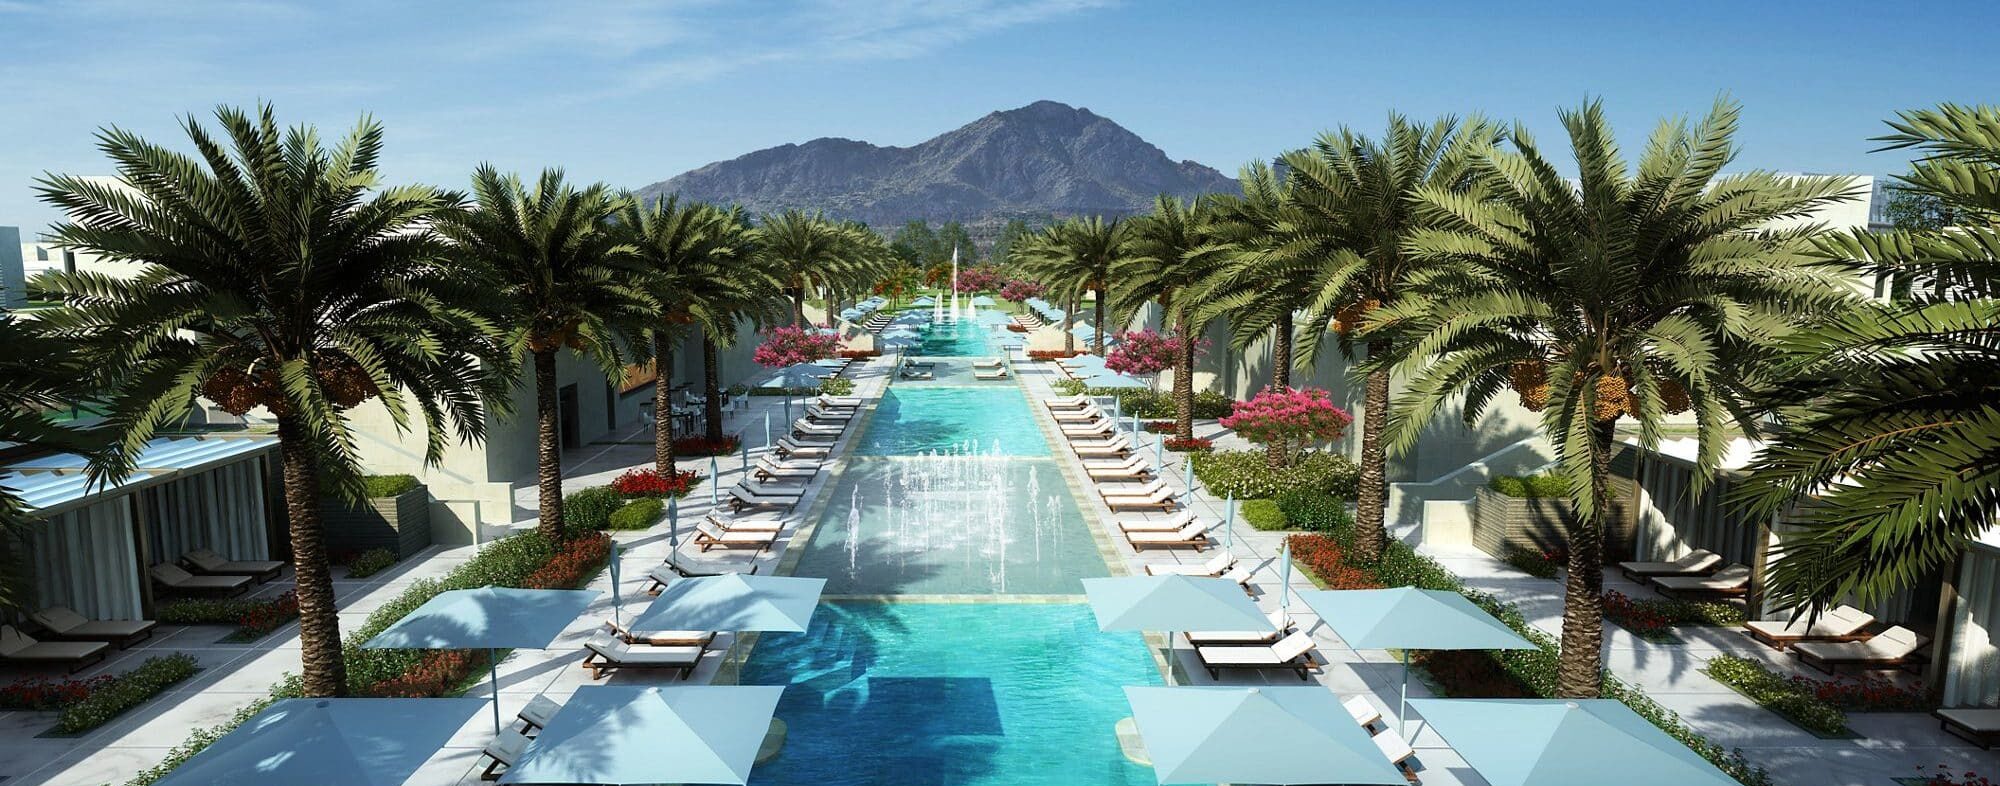 Ritz-Carlton breaks ground on Paradise Valley resort